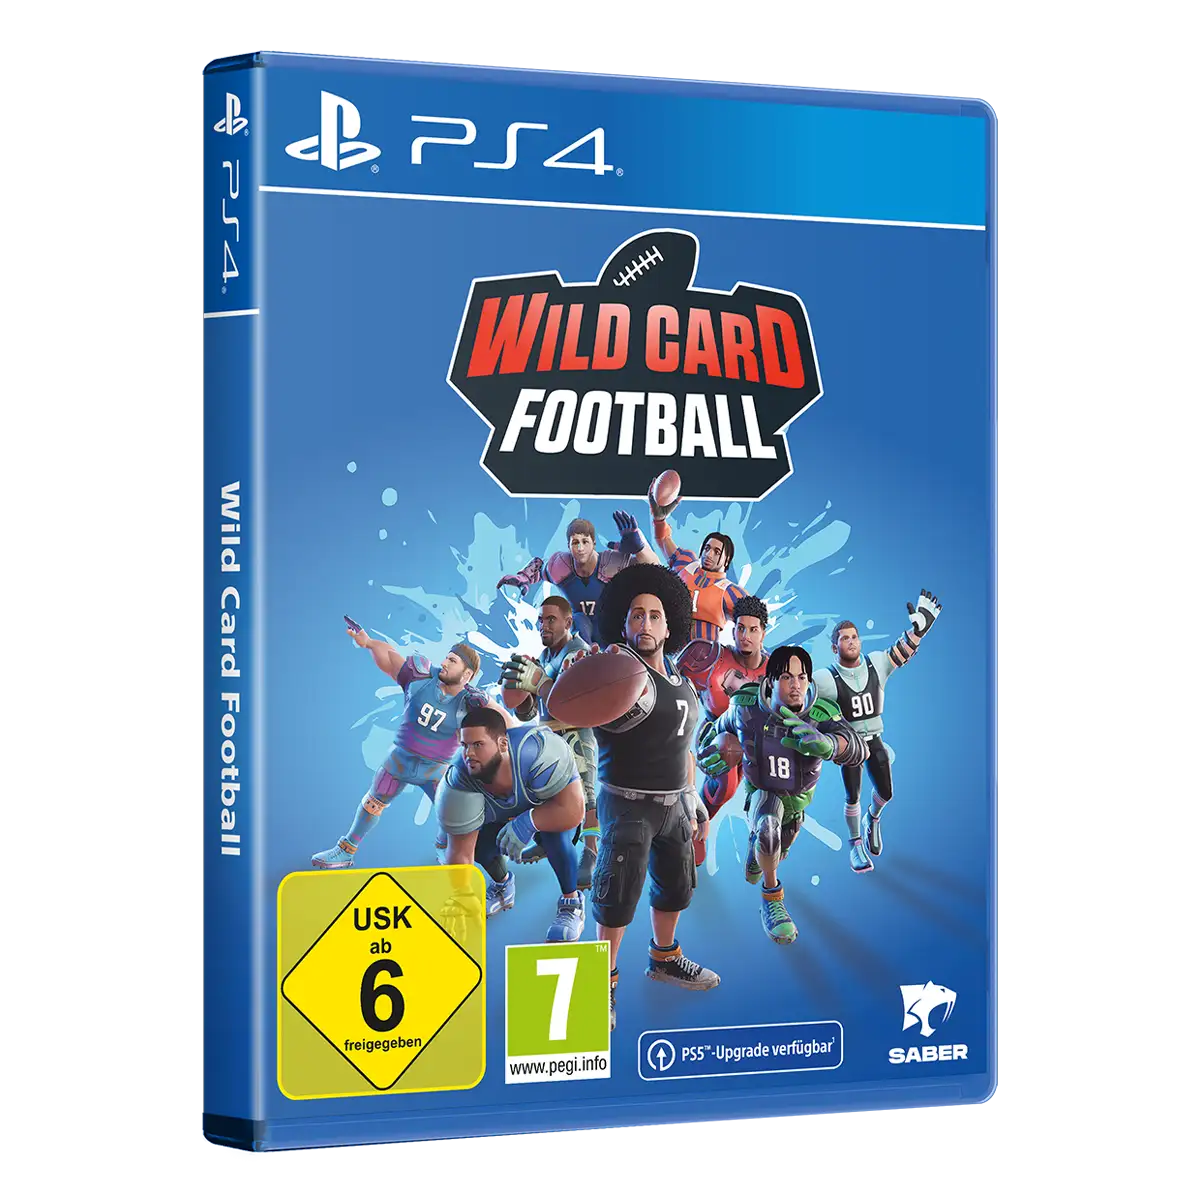 Wild Card Football (PS4) Image 2